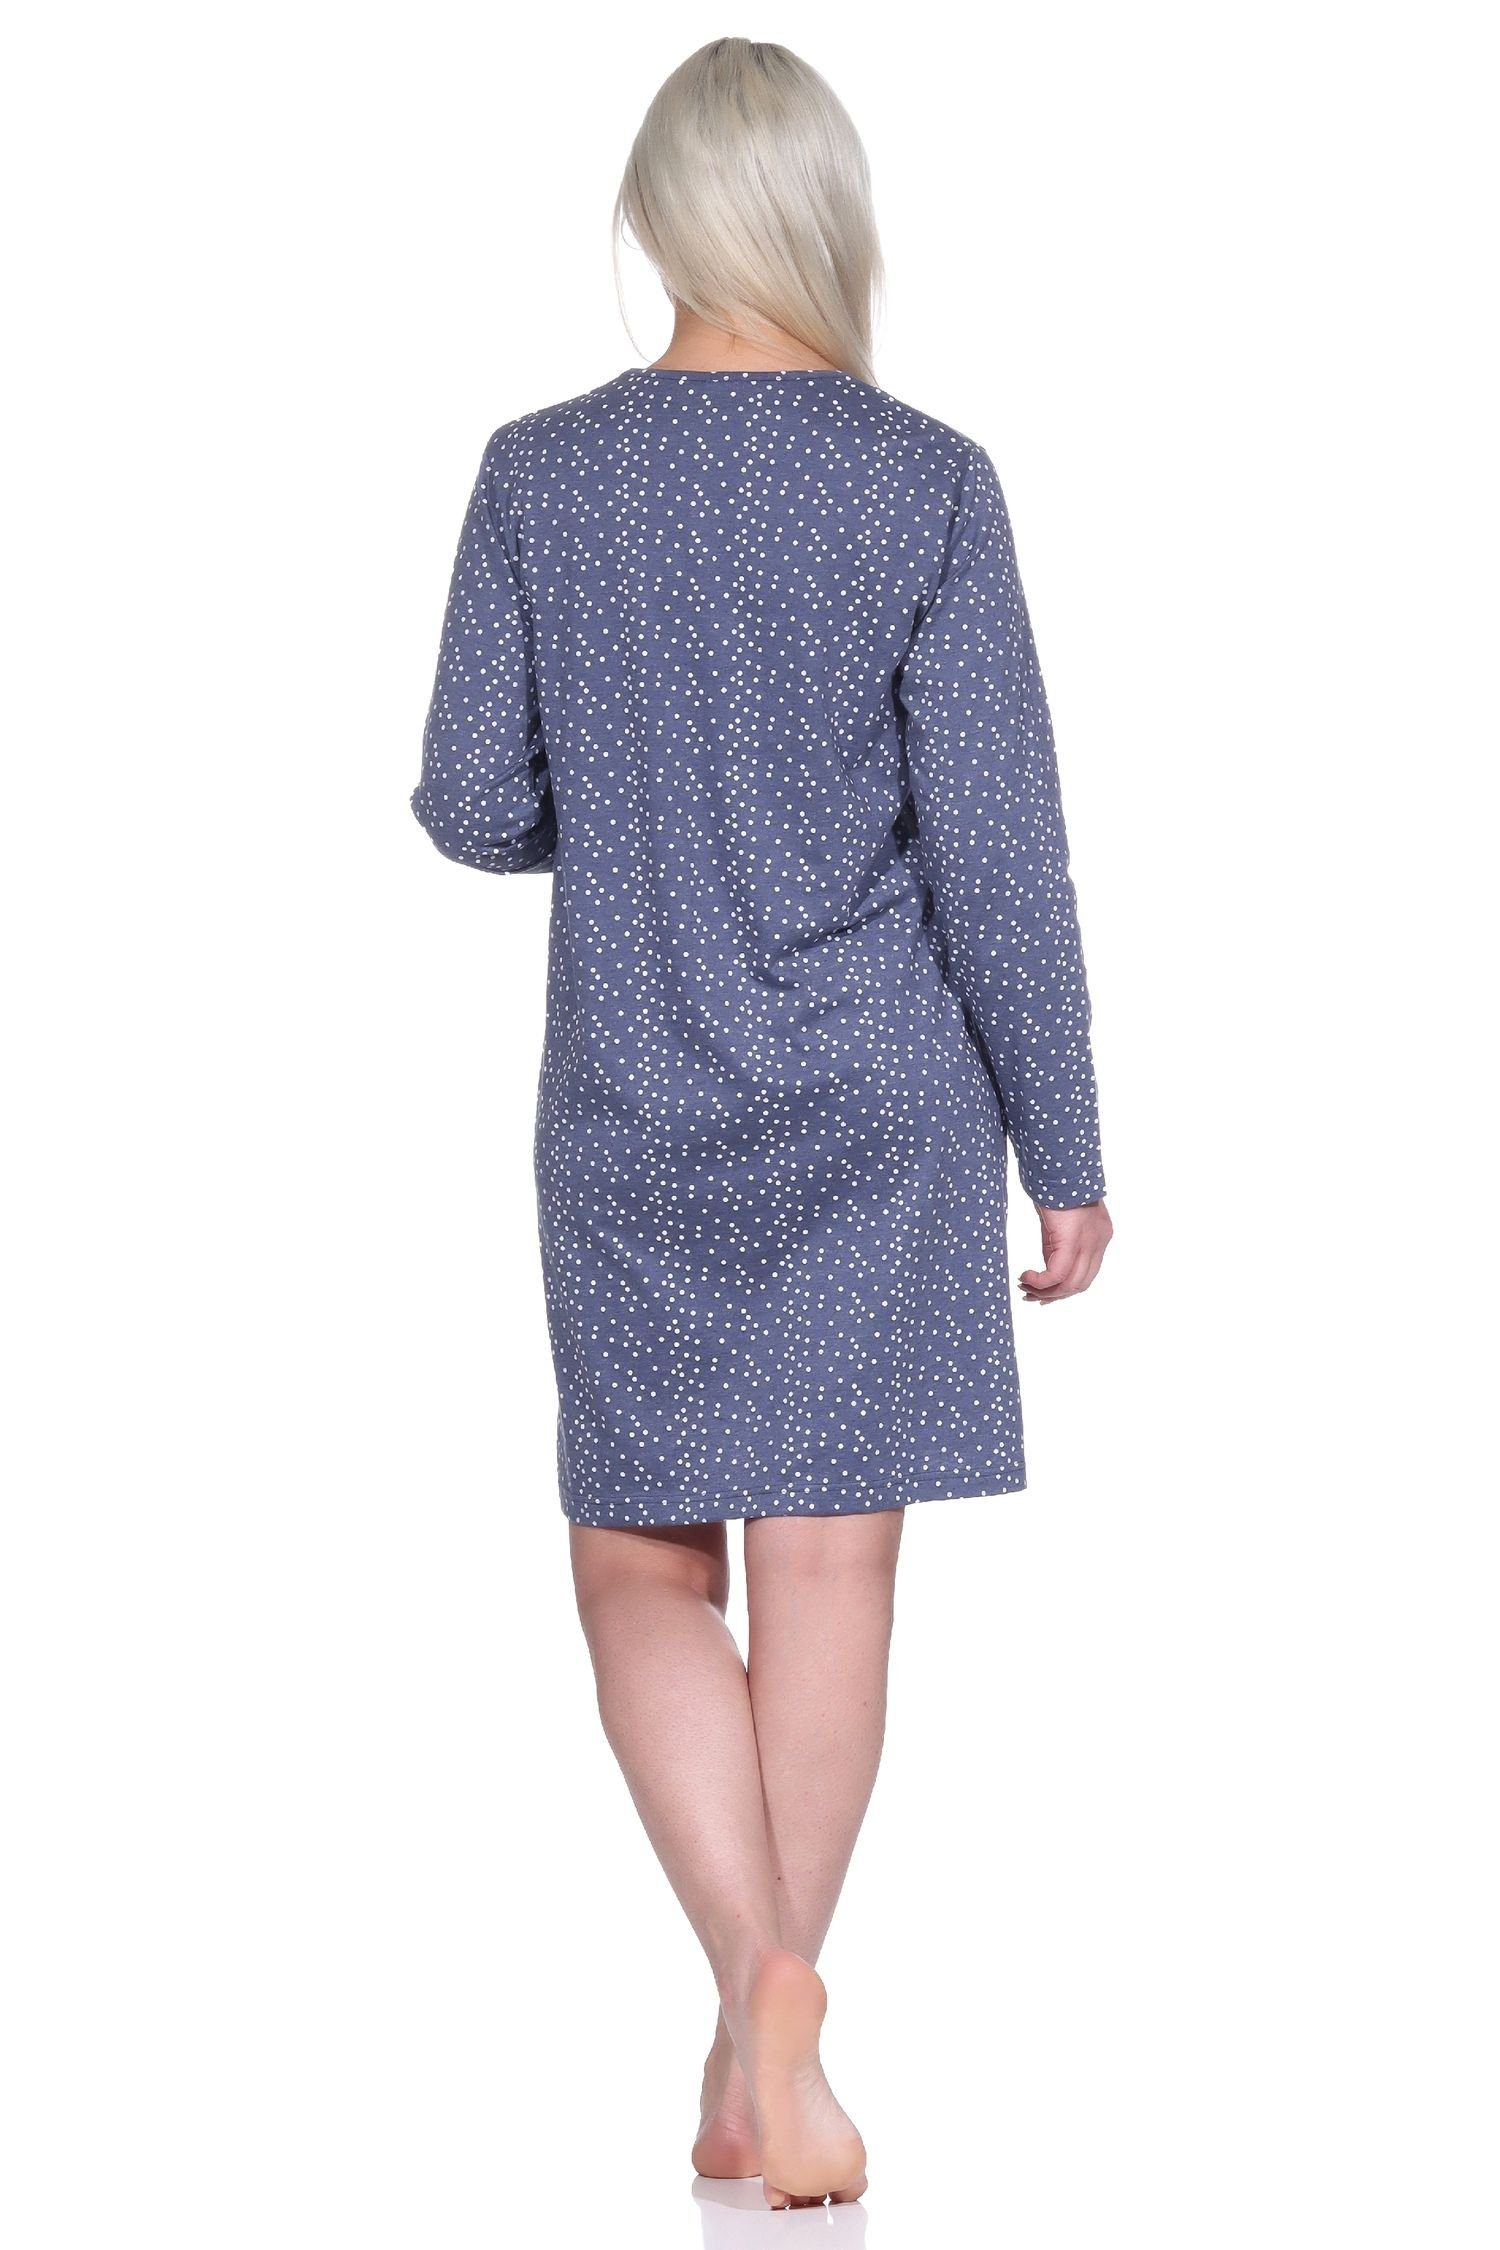 Normann Nachthemd langarm Nachthemd Damen Tupfenoptik mit Bigshirt grau-melange